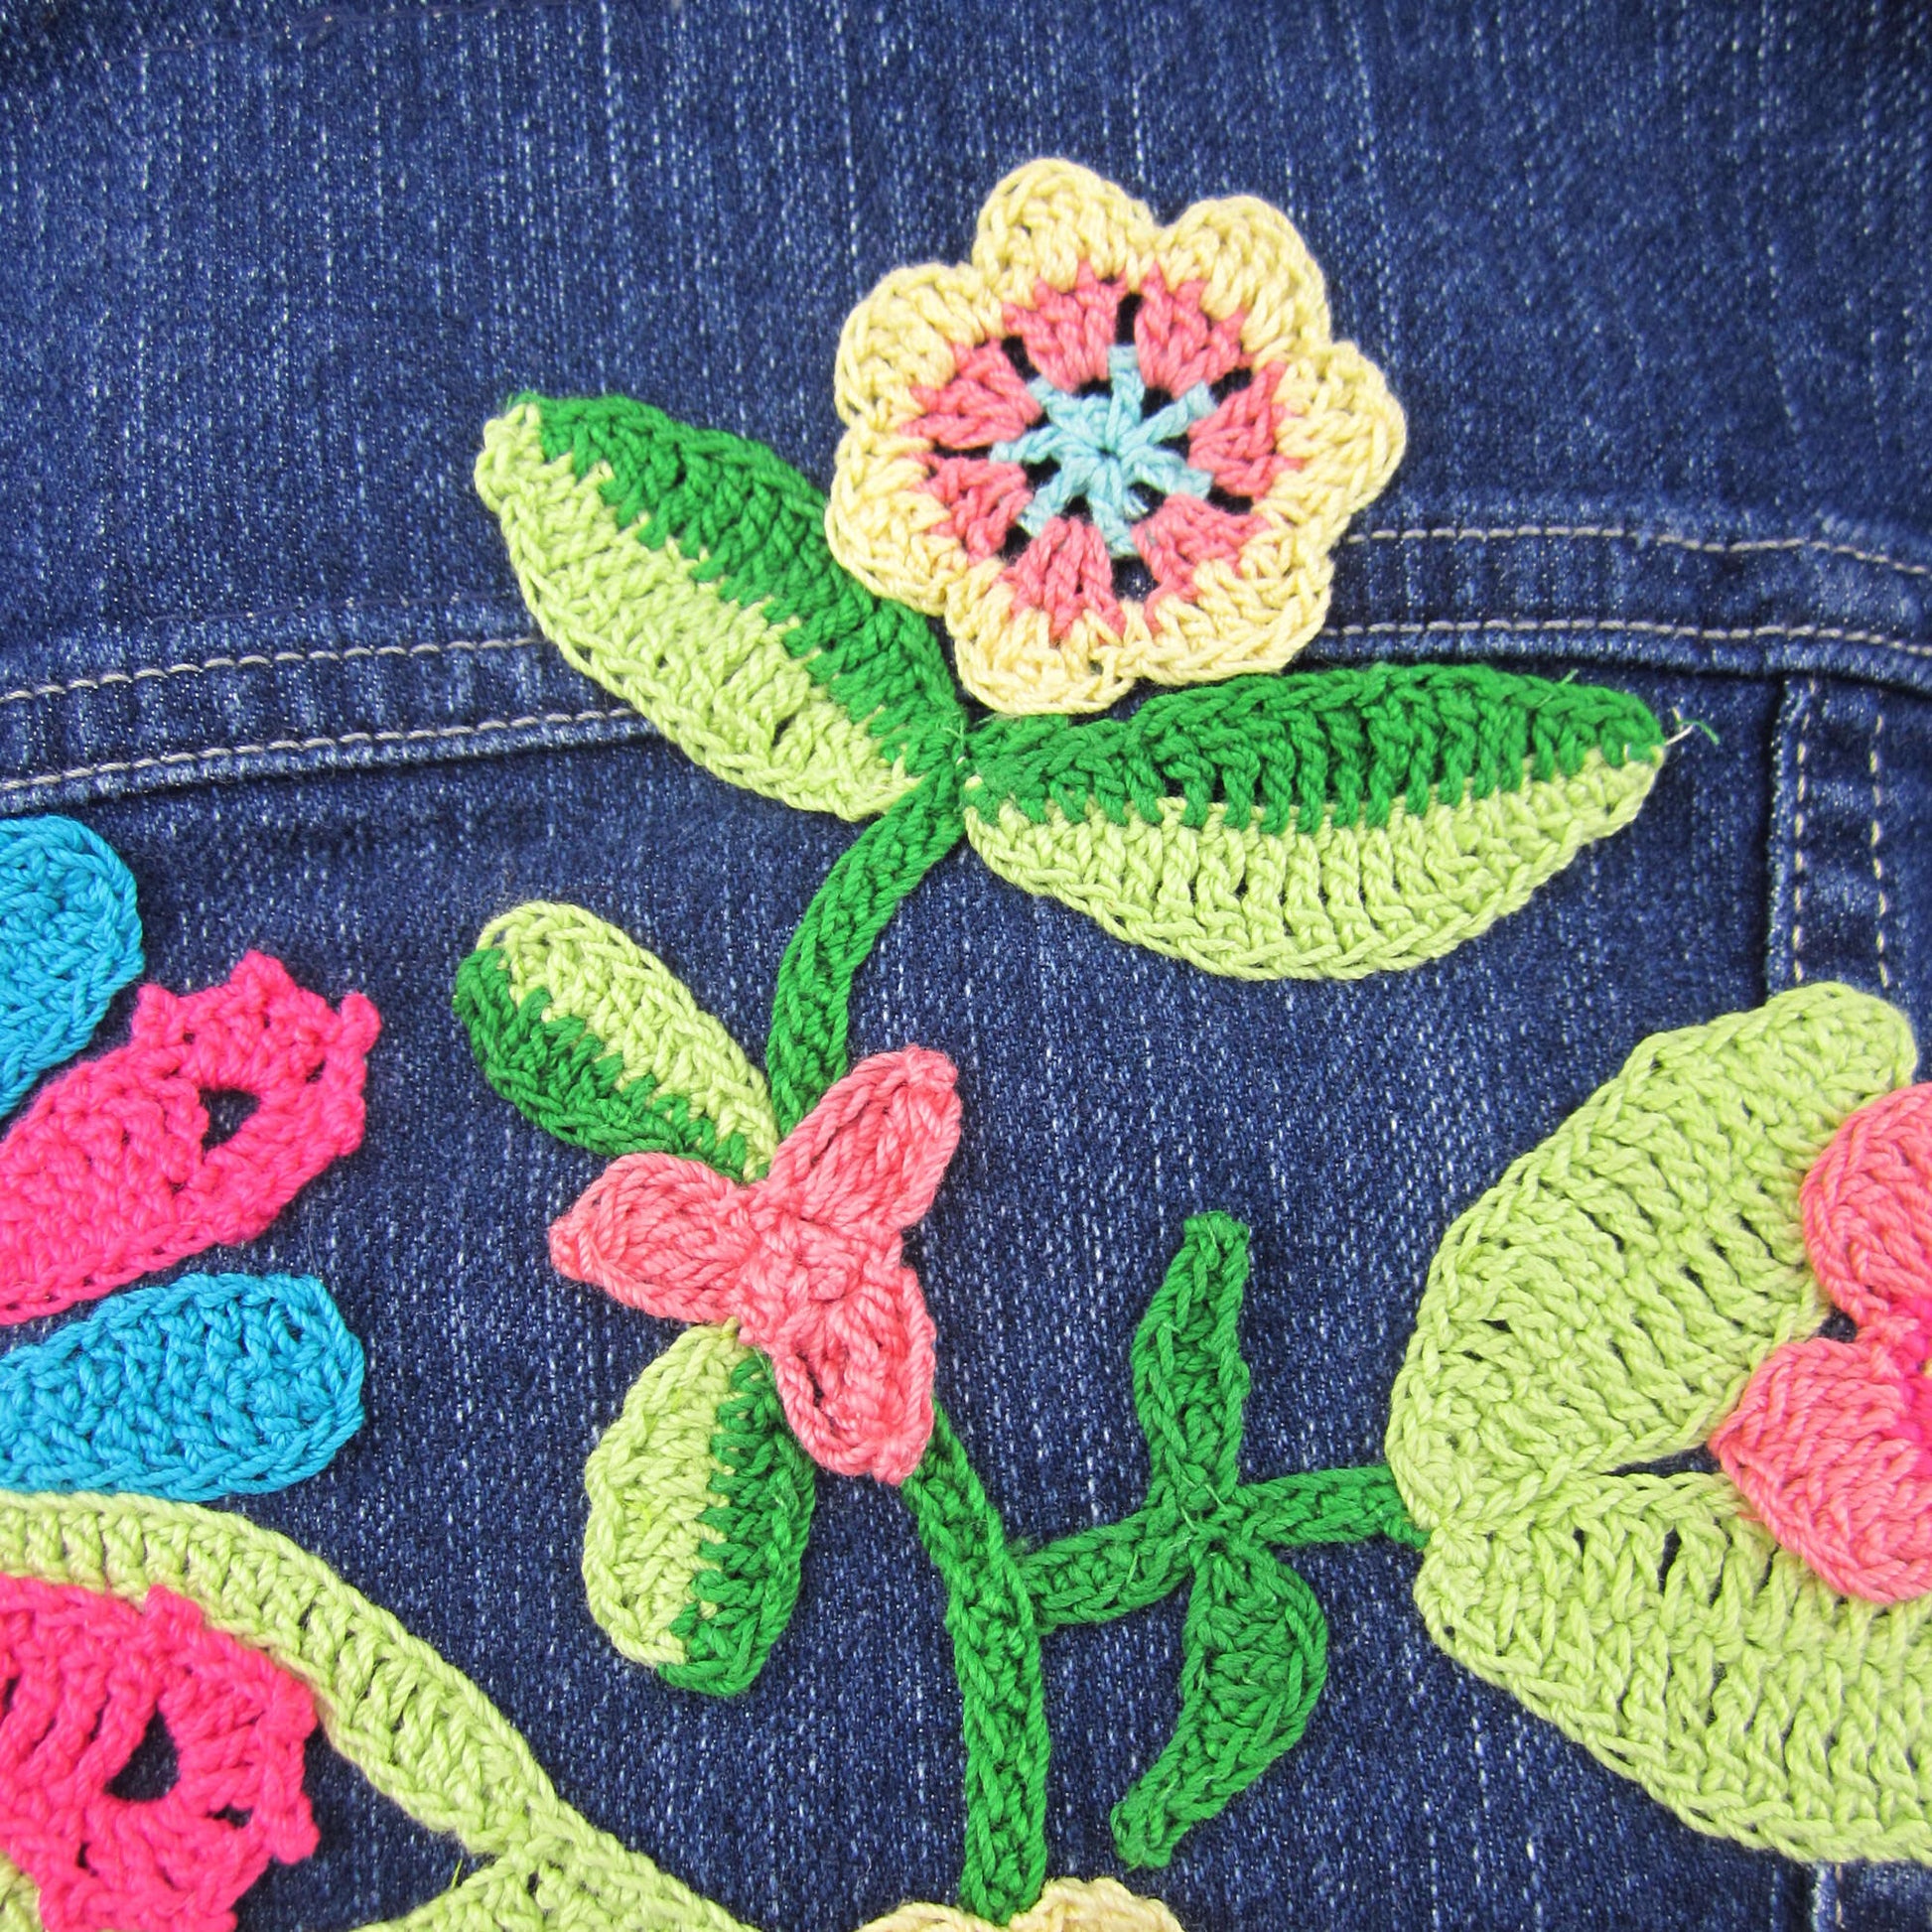 Free Aunt Lydia's Crochet Be-Flowered Denim Jacket Pattern